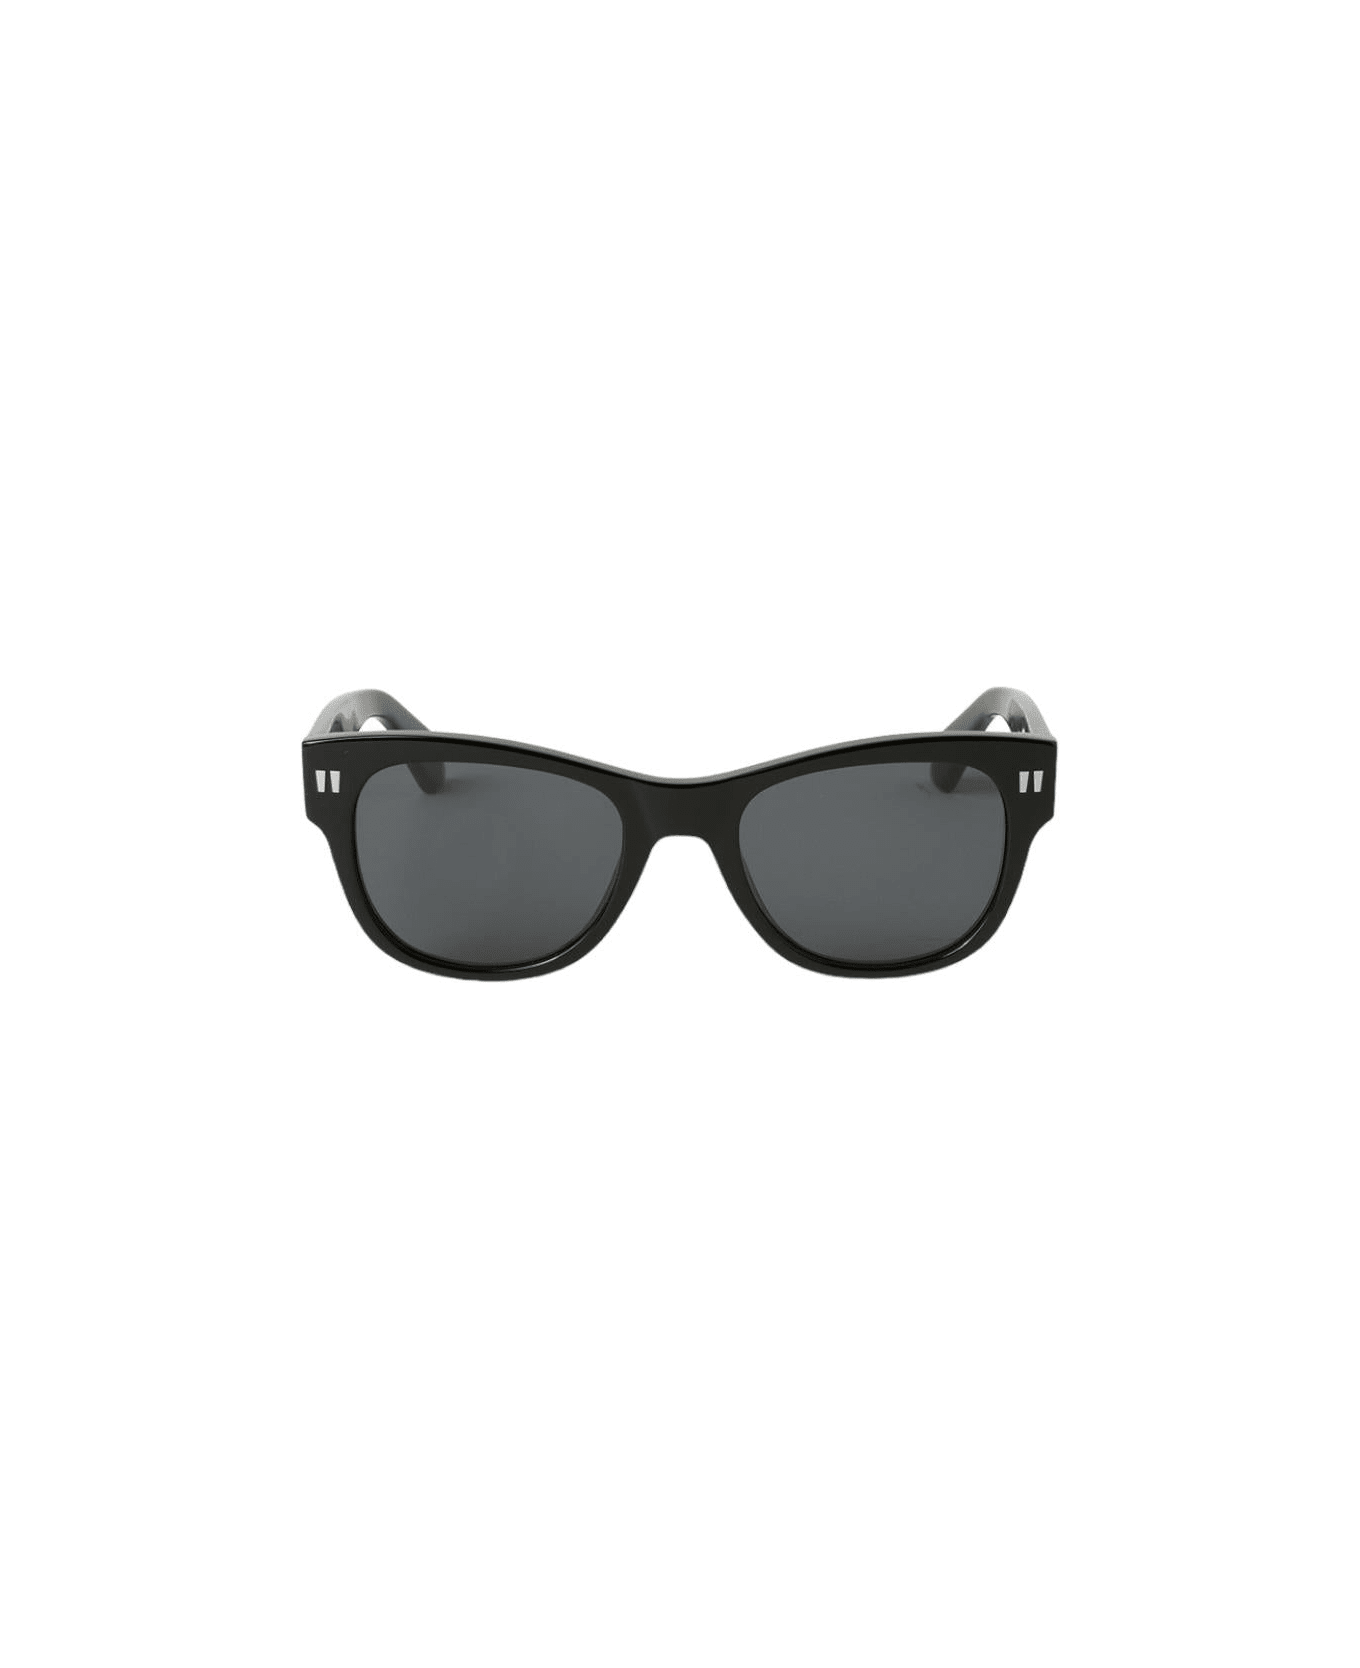 Off-White Moab - Oeri107 Sunglasses サングラス